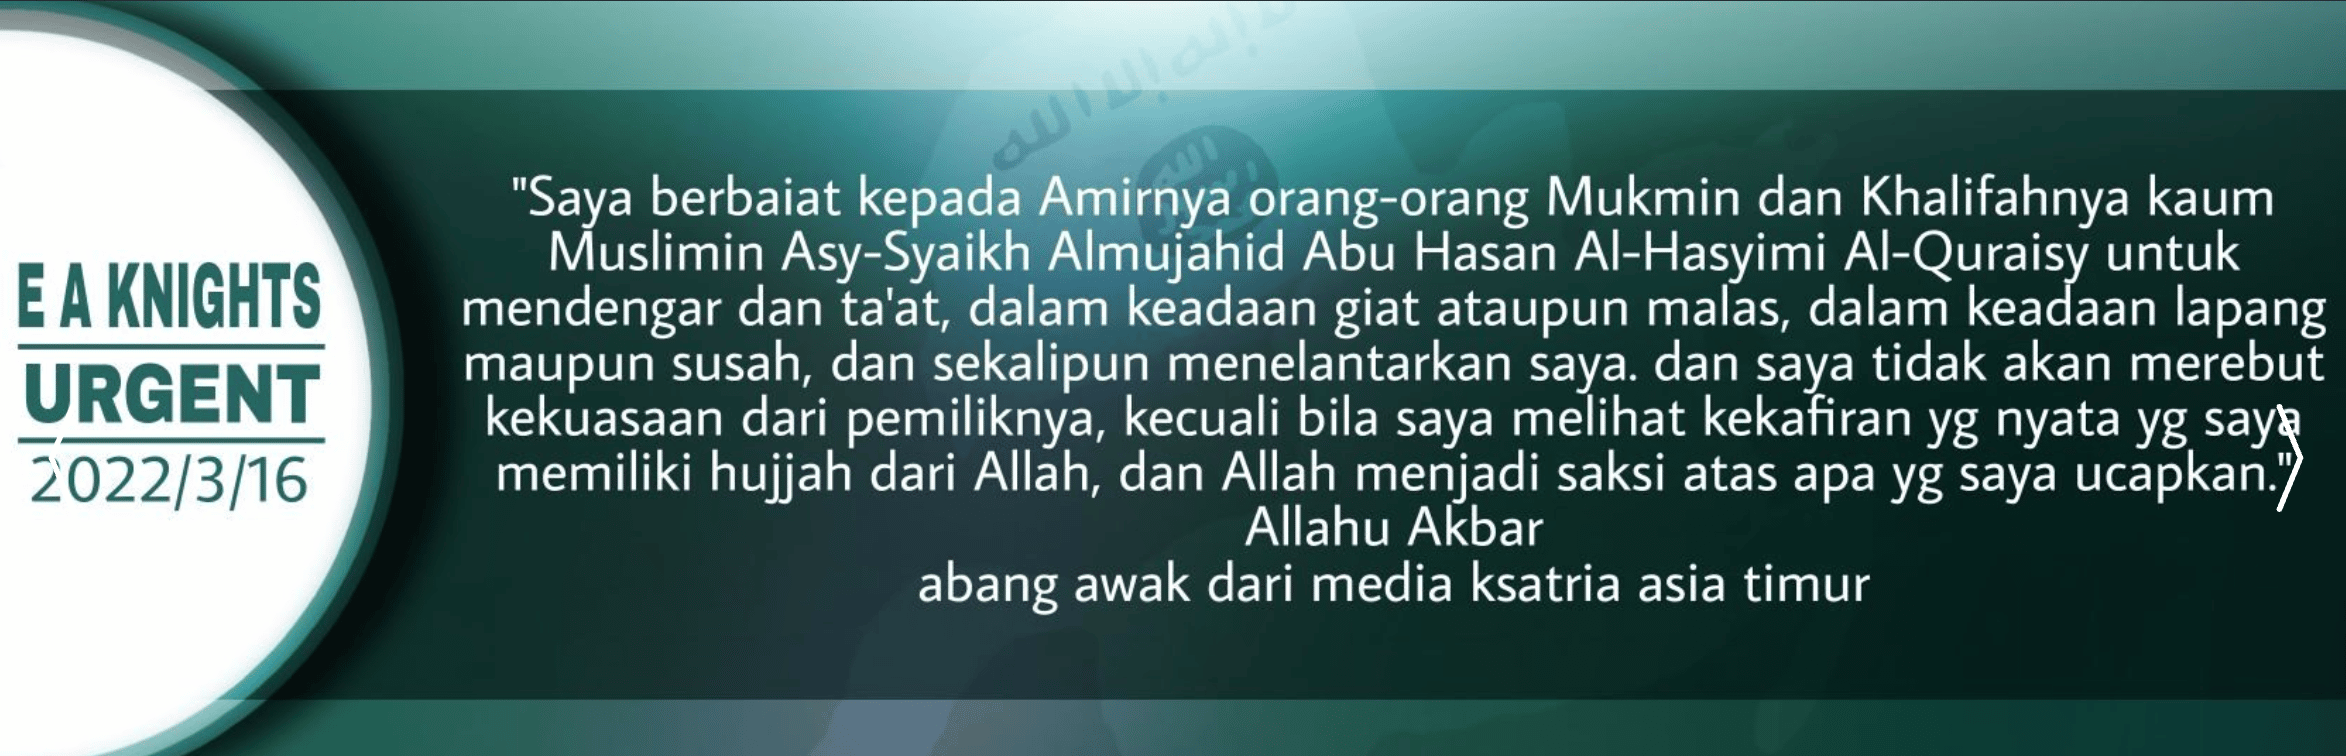 Unofficial Islamic State East Asia (ISEA) Melayu Media Kesatria Asia Timur Bay’ah To The New Caliph Abu Hassan Al-Hashimi Al-Qurashi, Indonesia - 16 March 2022